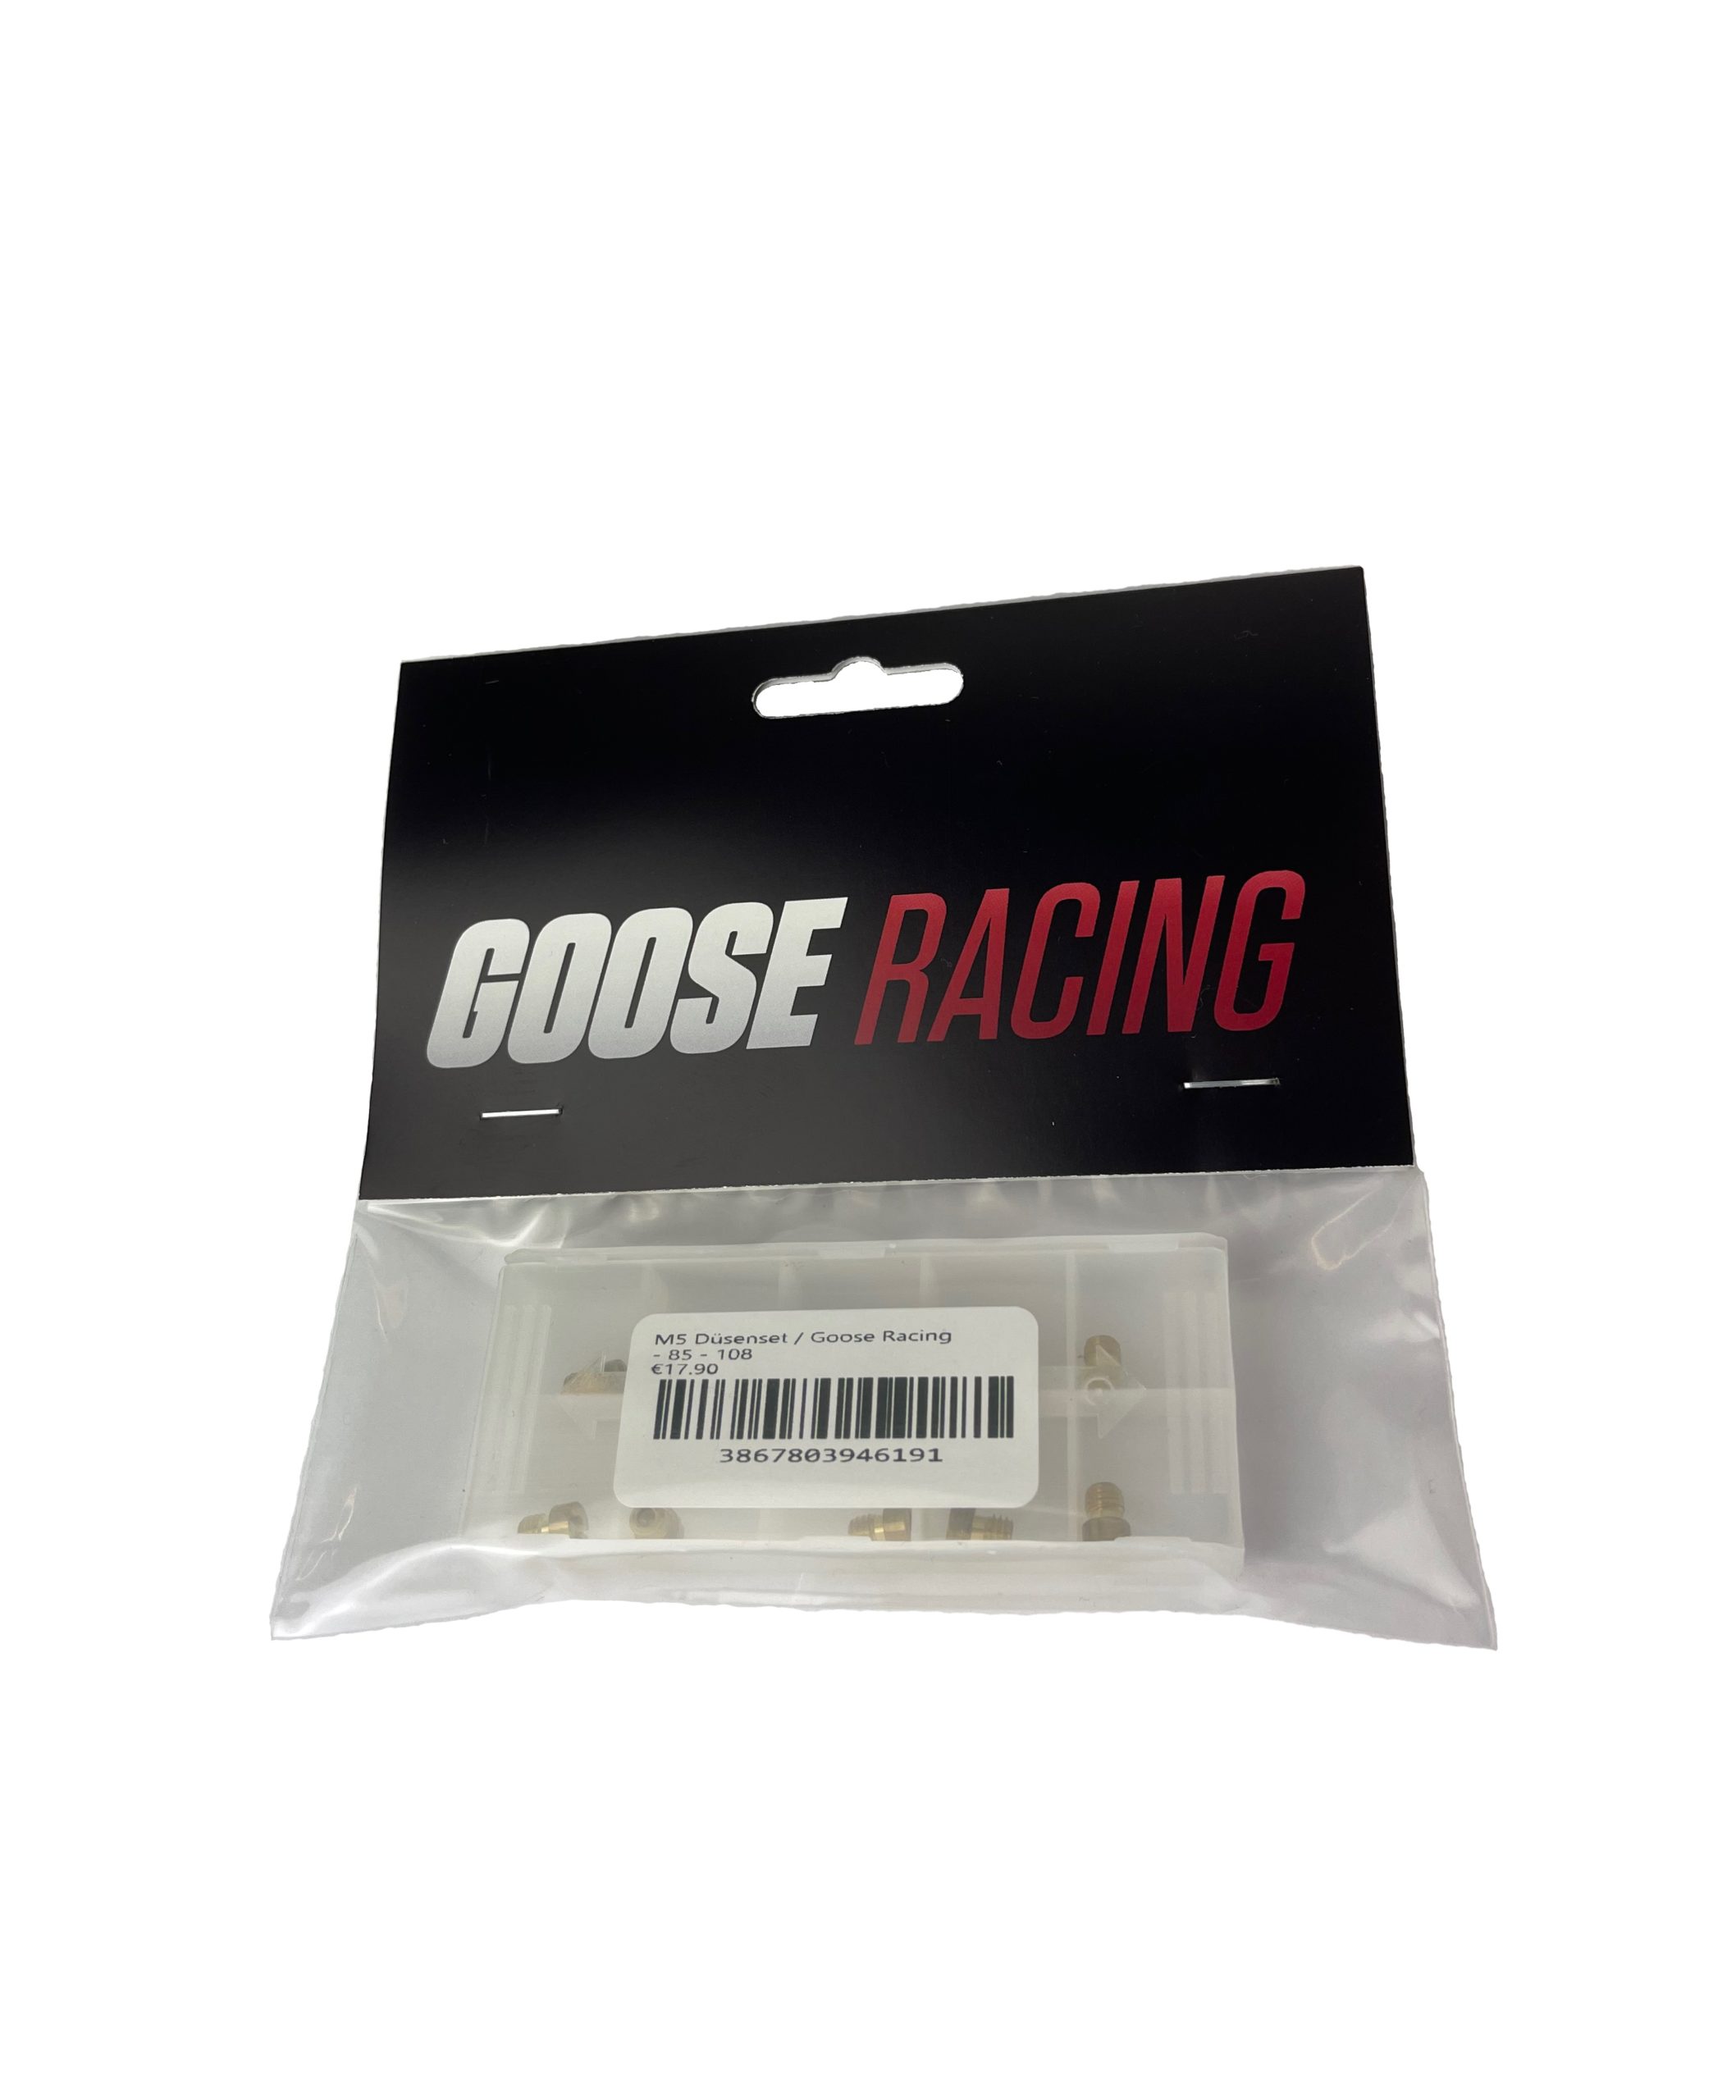 https://www.goose-racing.at/wp-content/uploads/2021/09/3F3D3A61-9F23-43C7-B6B9-A89536D54B40-scaled.jpeg